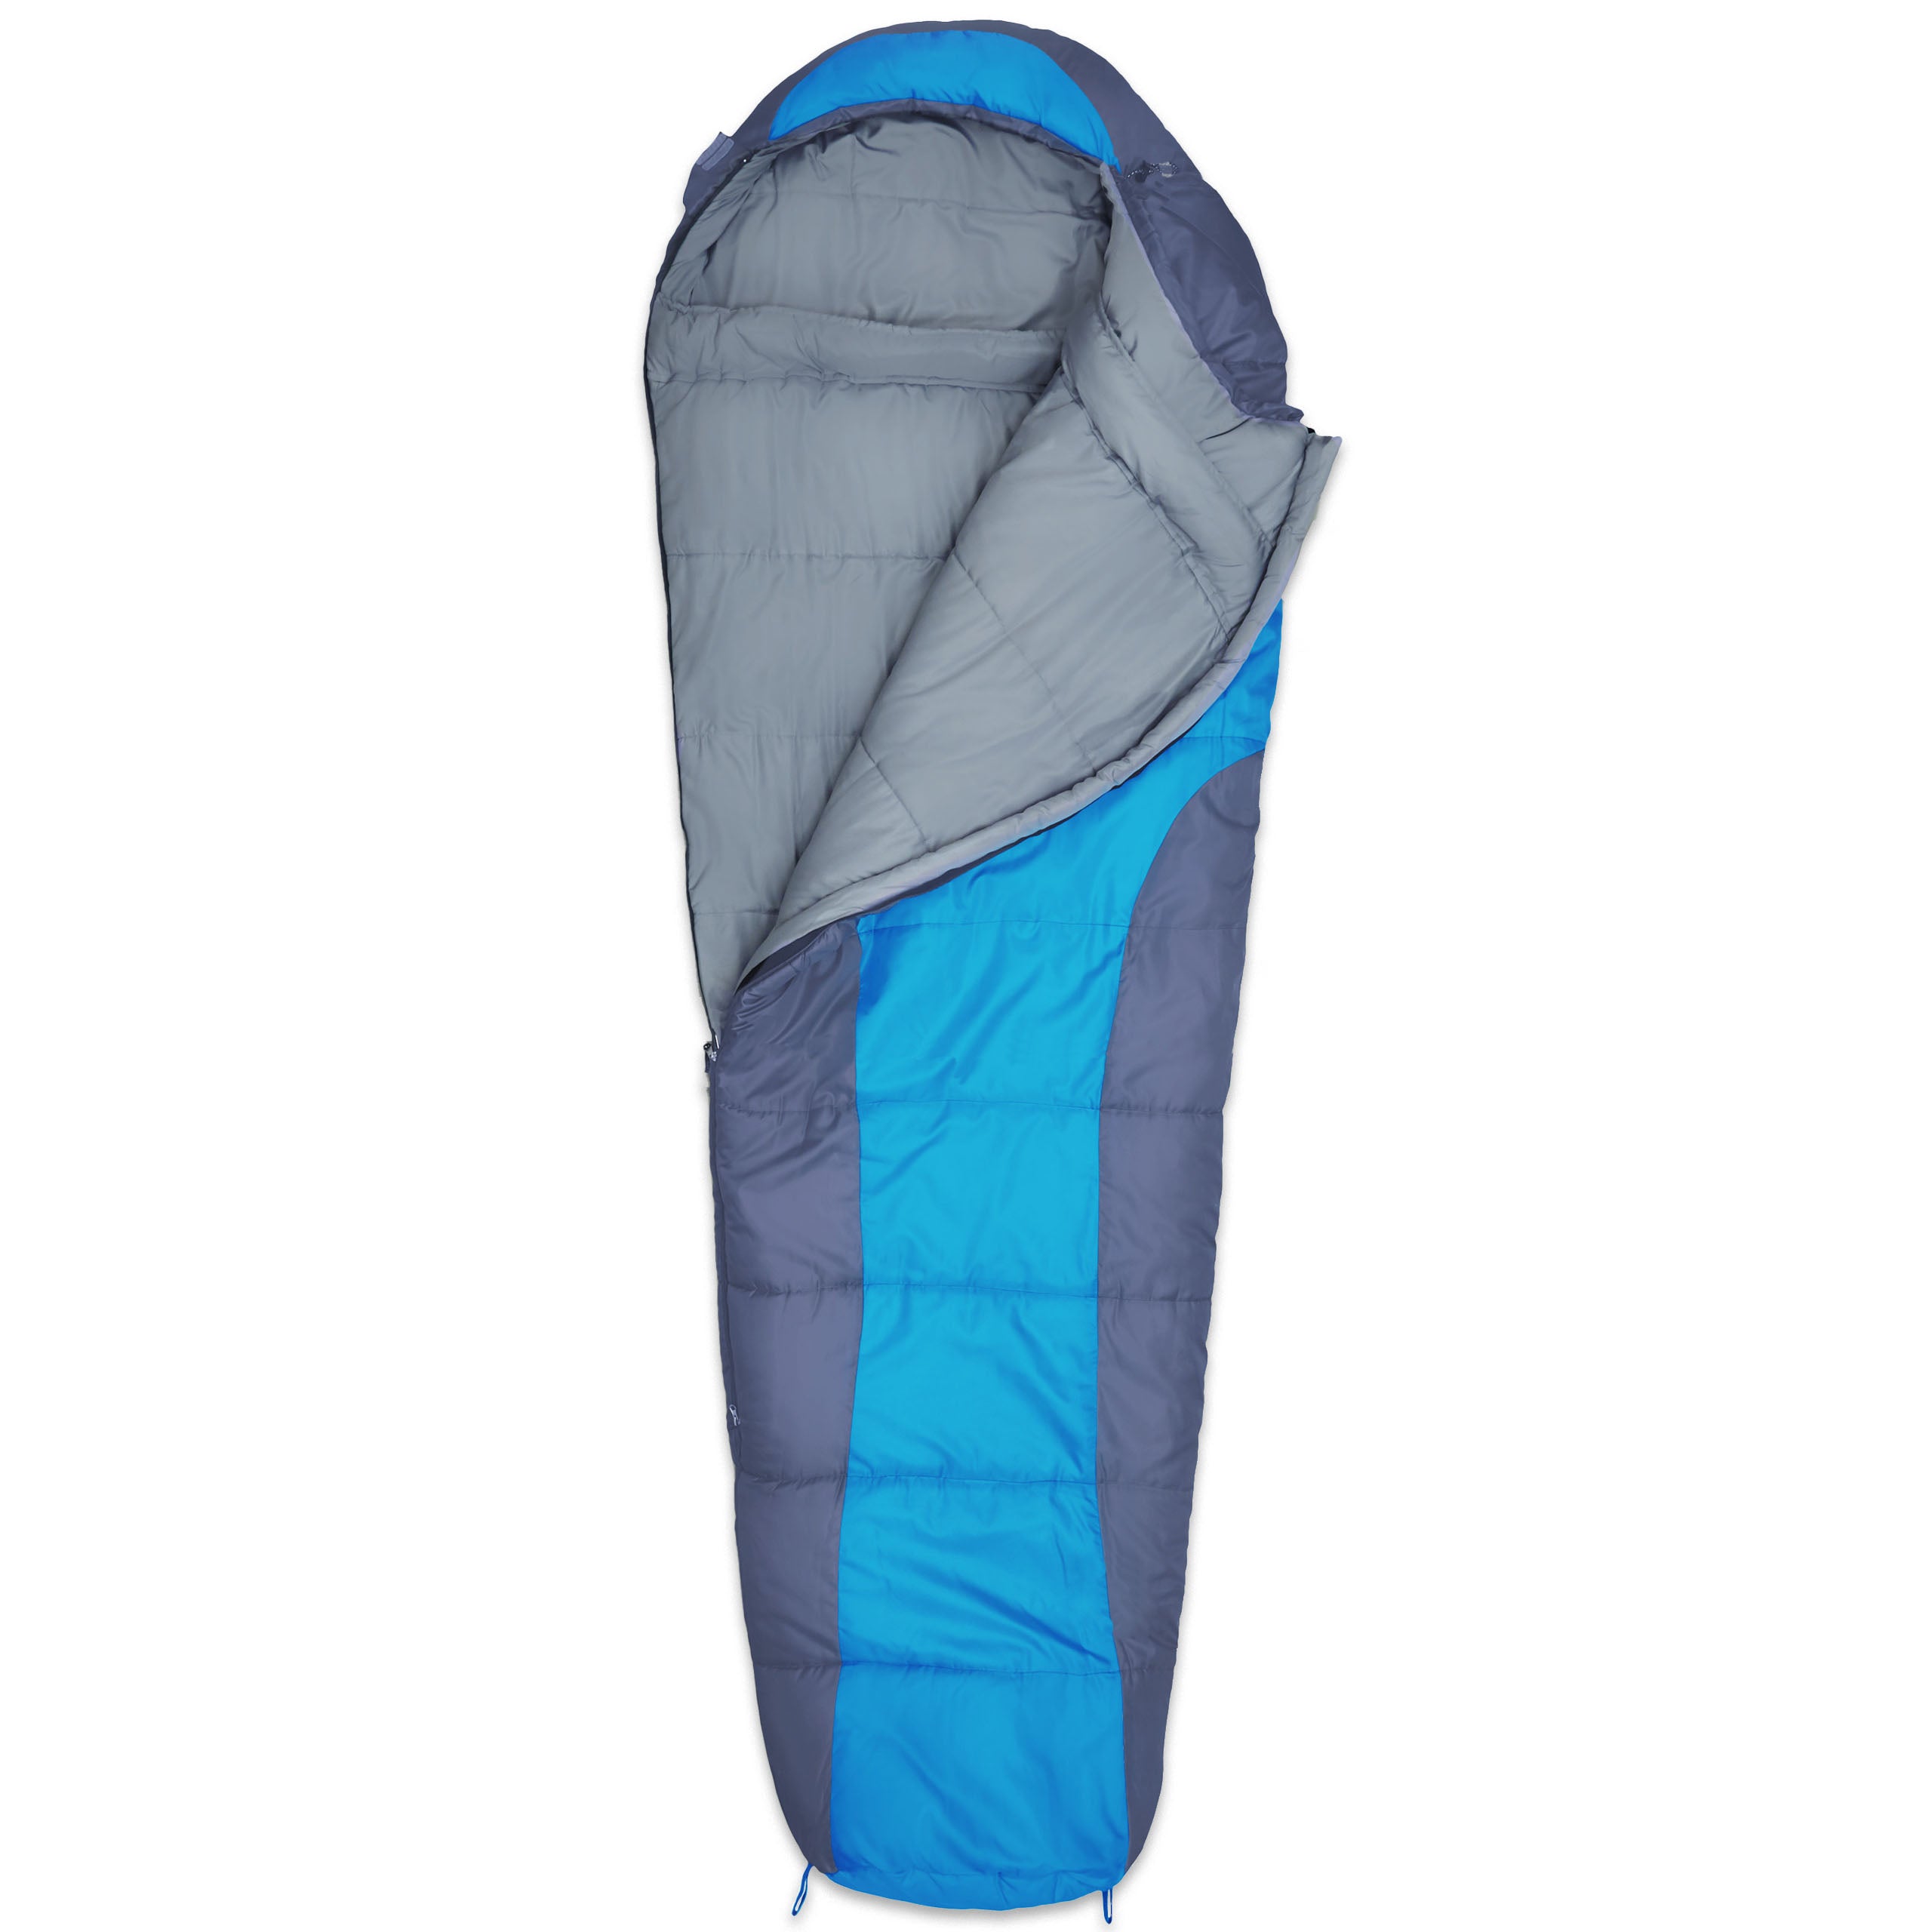 Camping Schlafsack Small & Light - Mumienschlafsack mit Tasche - 220 x 80 x 50 cm - Grau-Himmelblau